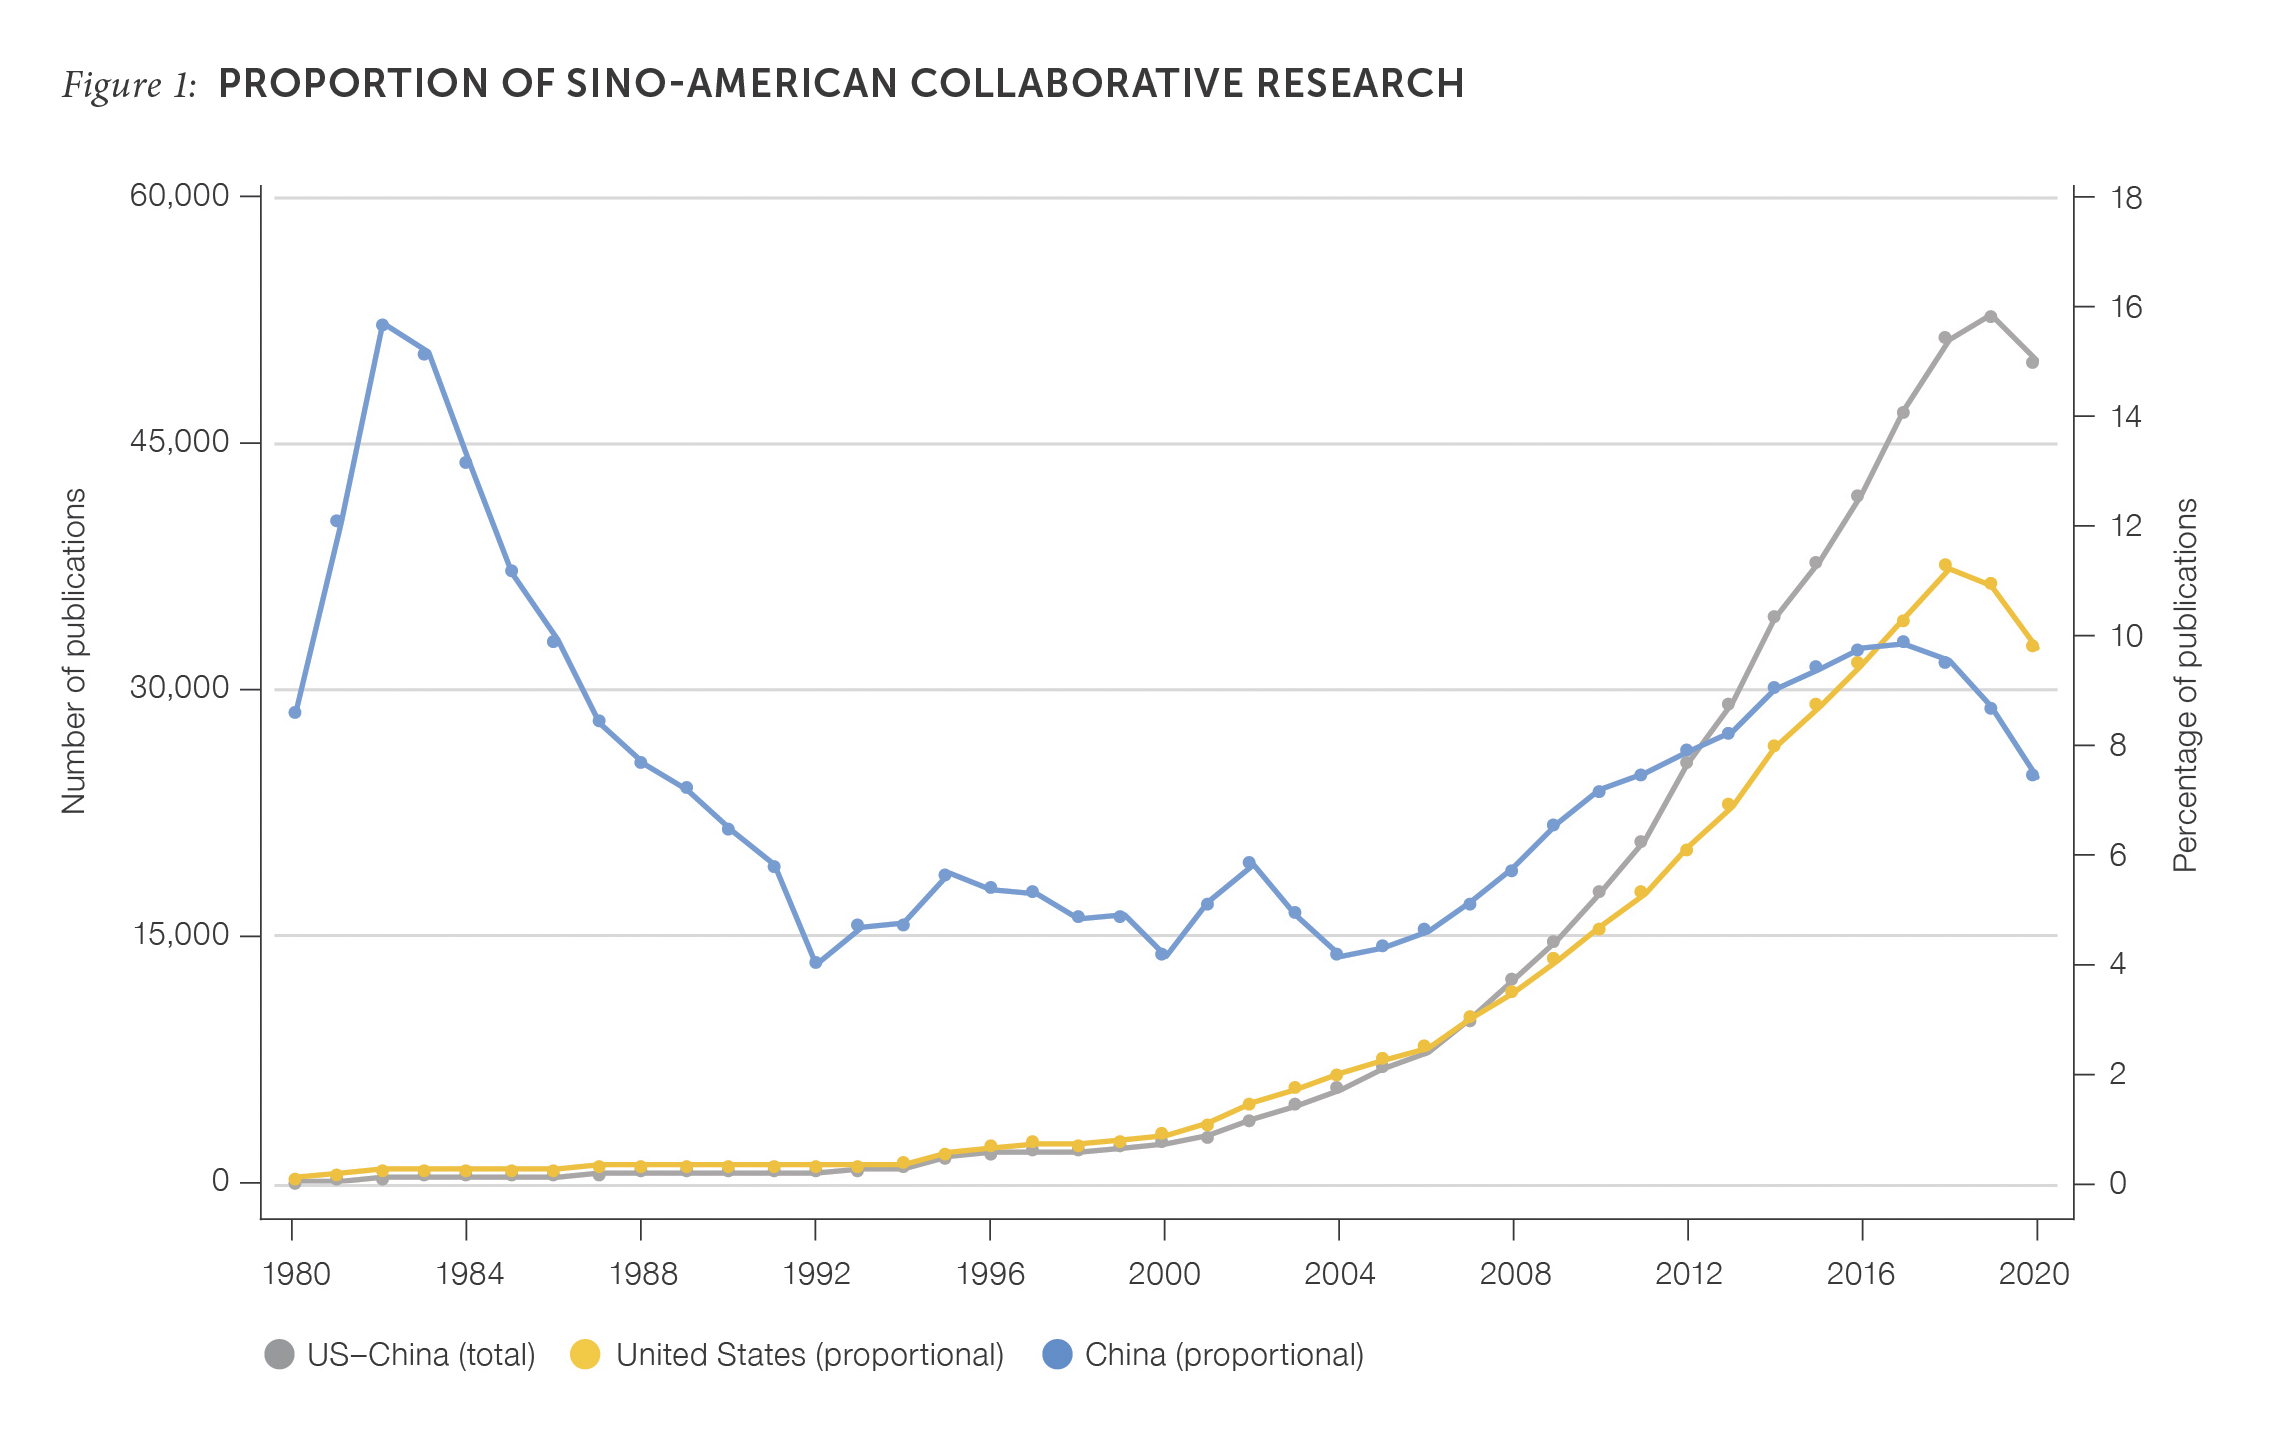 Figure 1. Proportion of Sino-American Collaborative Research